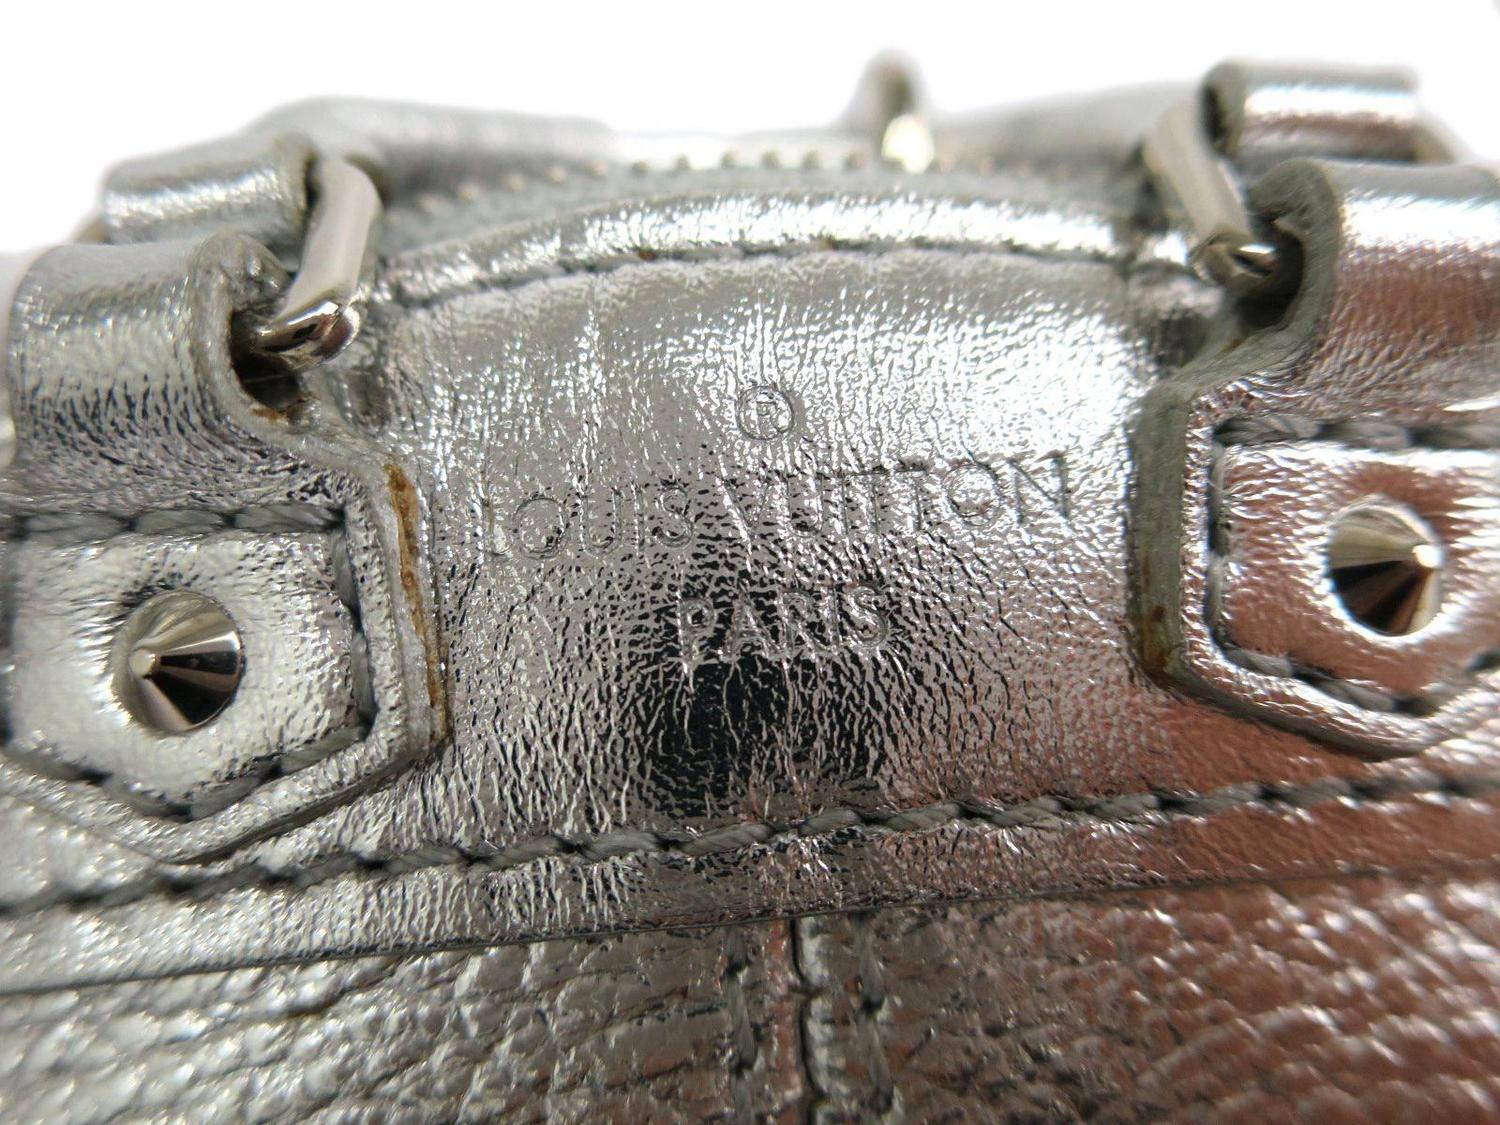 Louis Vuitton Silver Metallic Lockit Mini Handbag Keychain Bag Charm in Box at 1stdibs